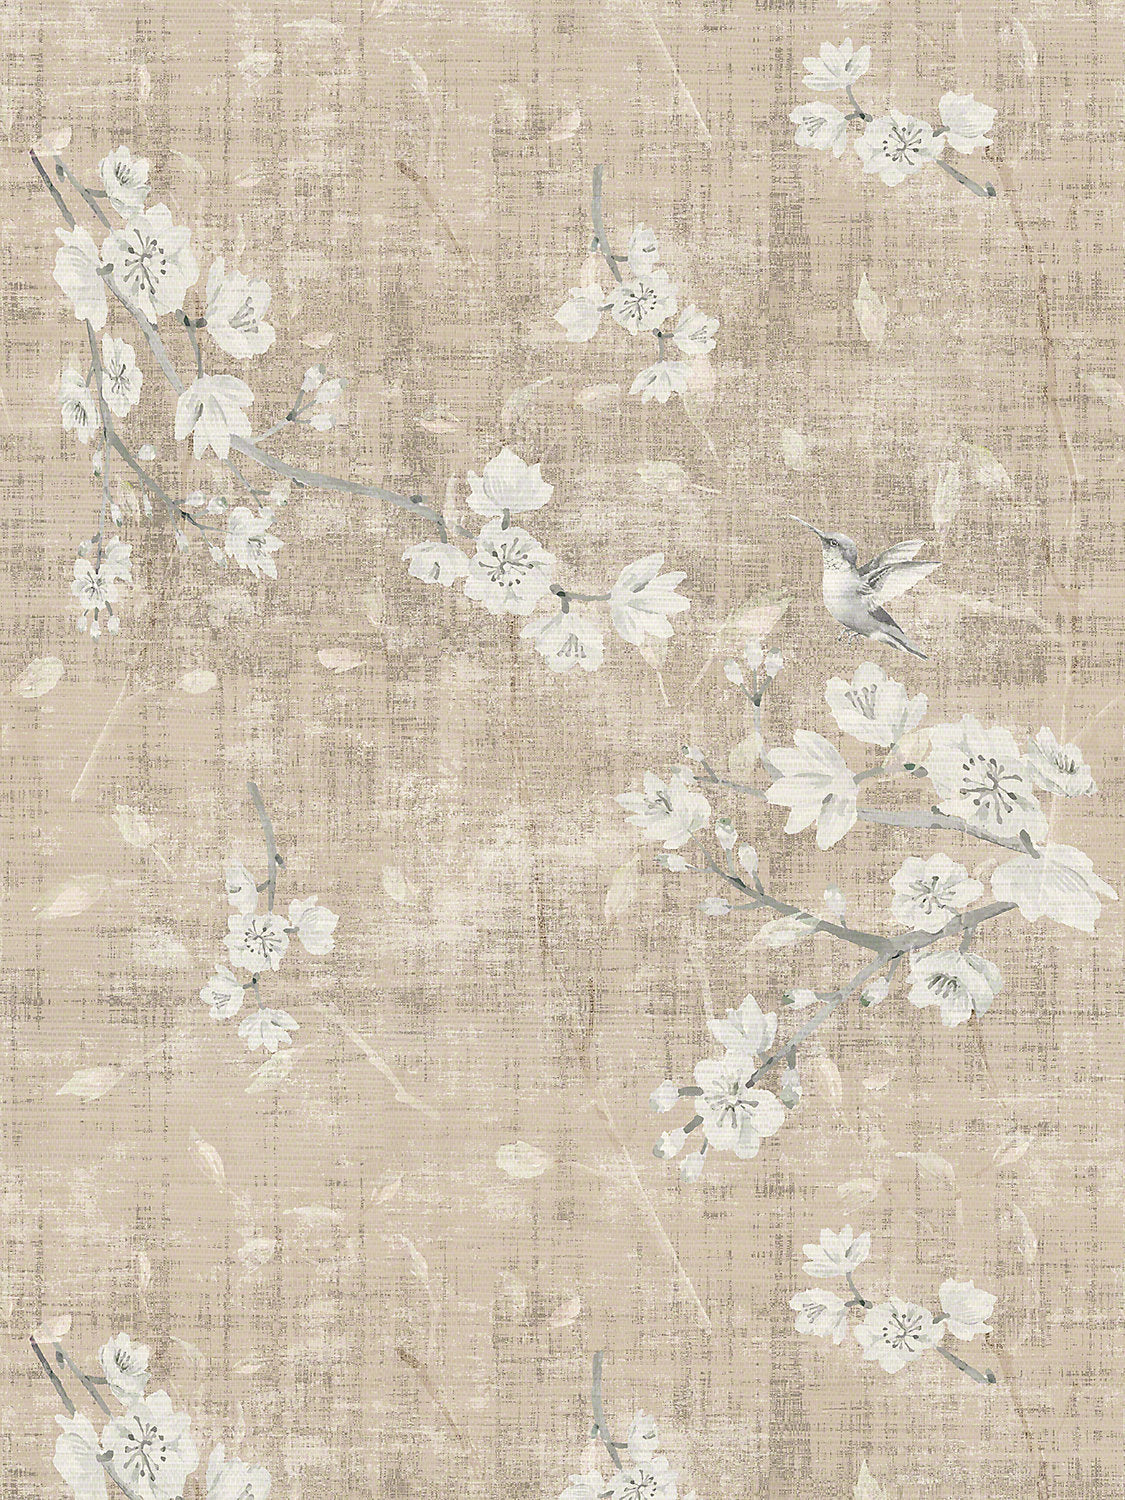 Blossom Fantasia French Gray Wallpaper, Per Yard - nicolettemayer.com